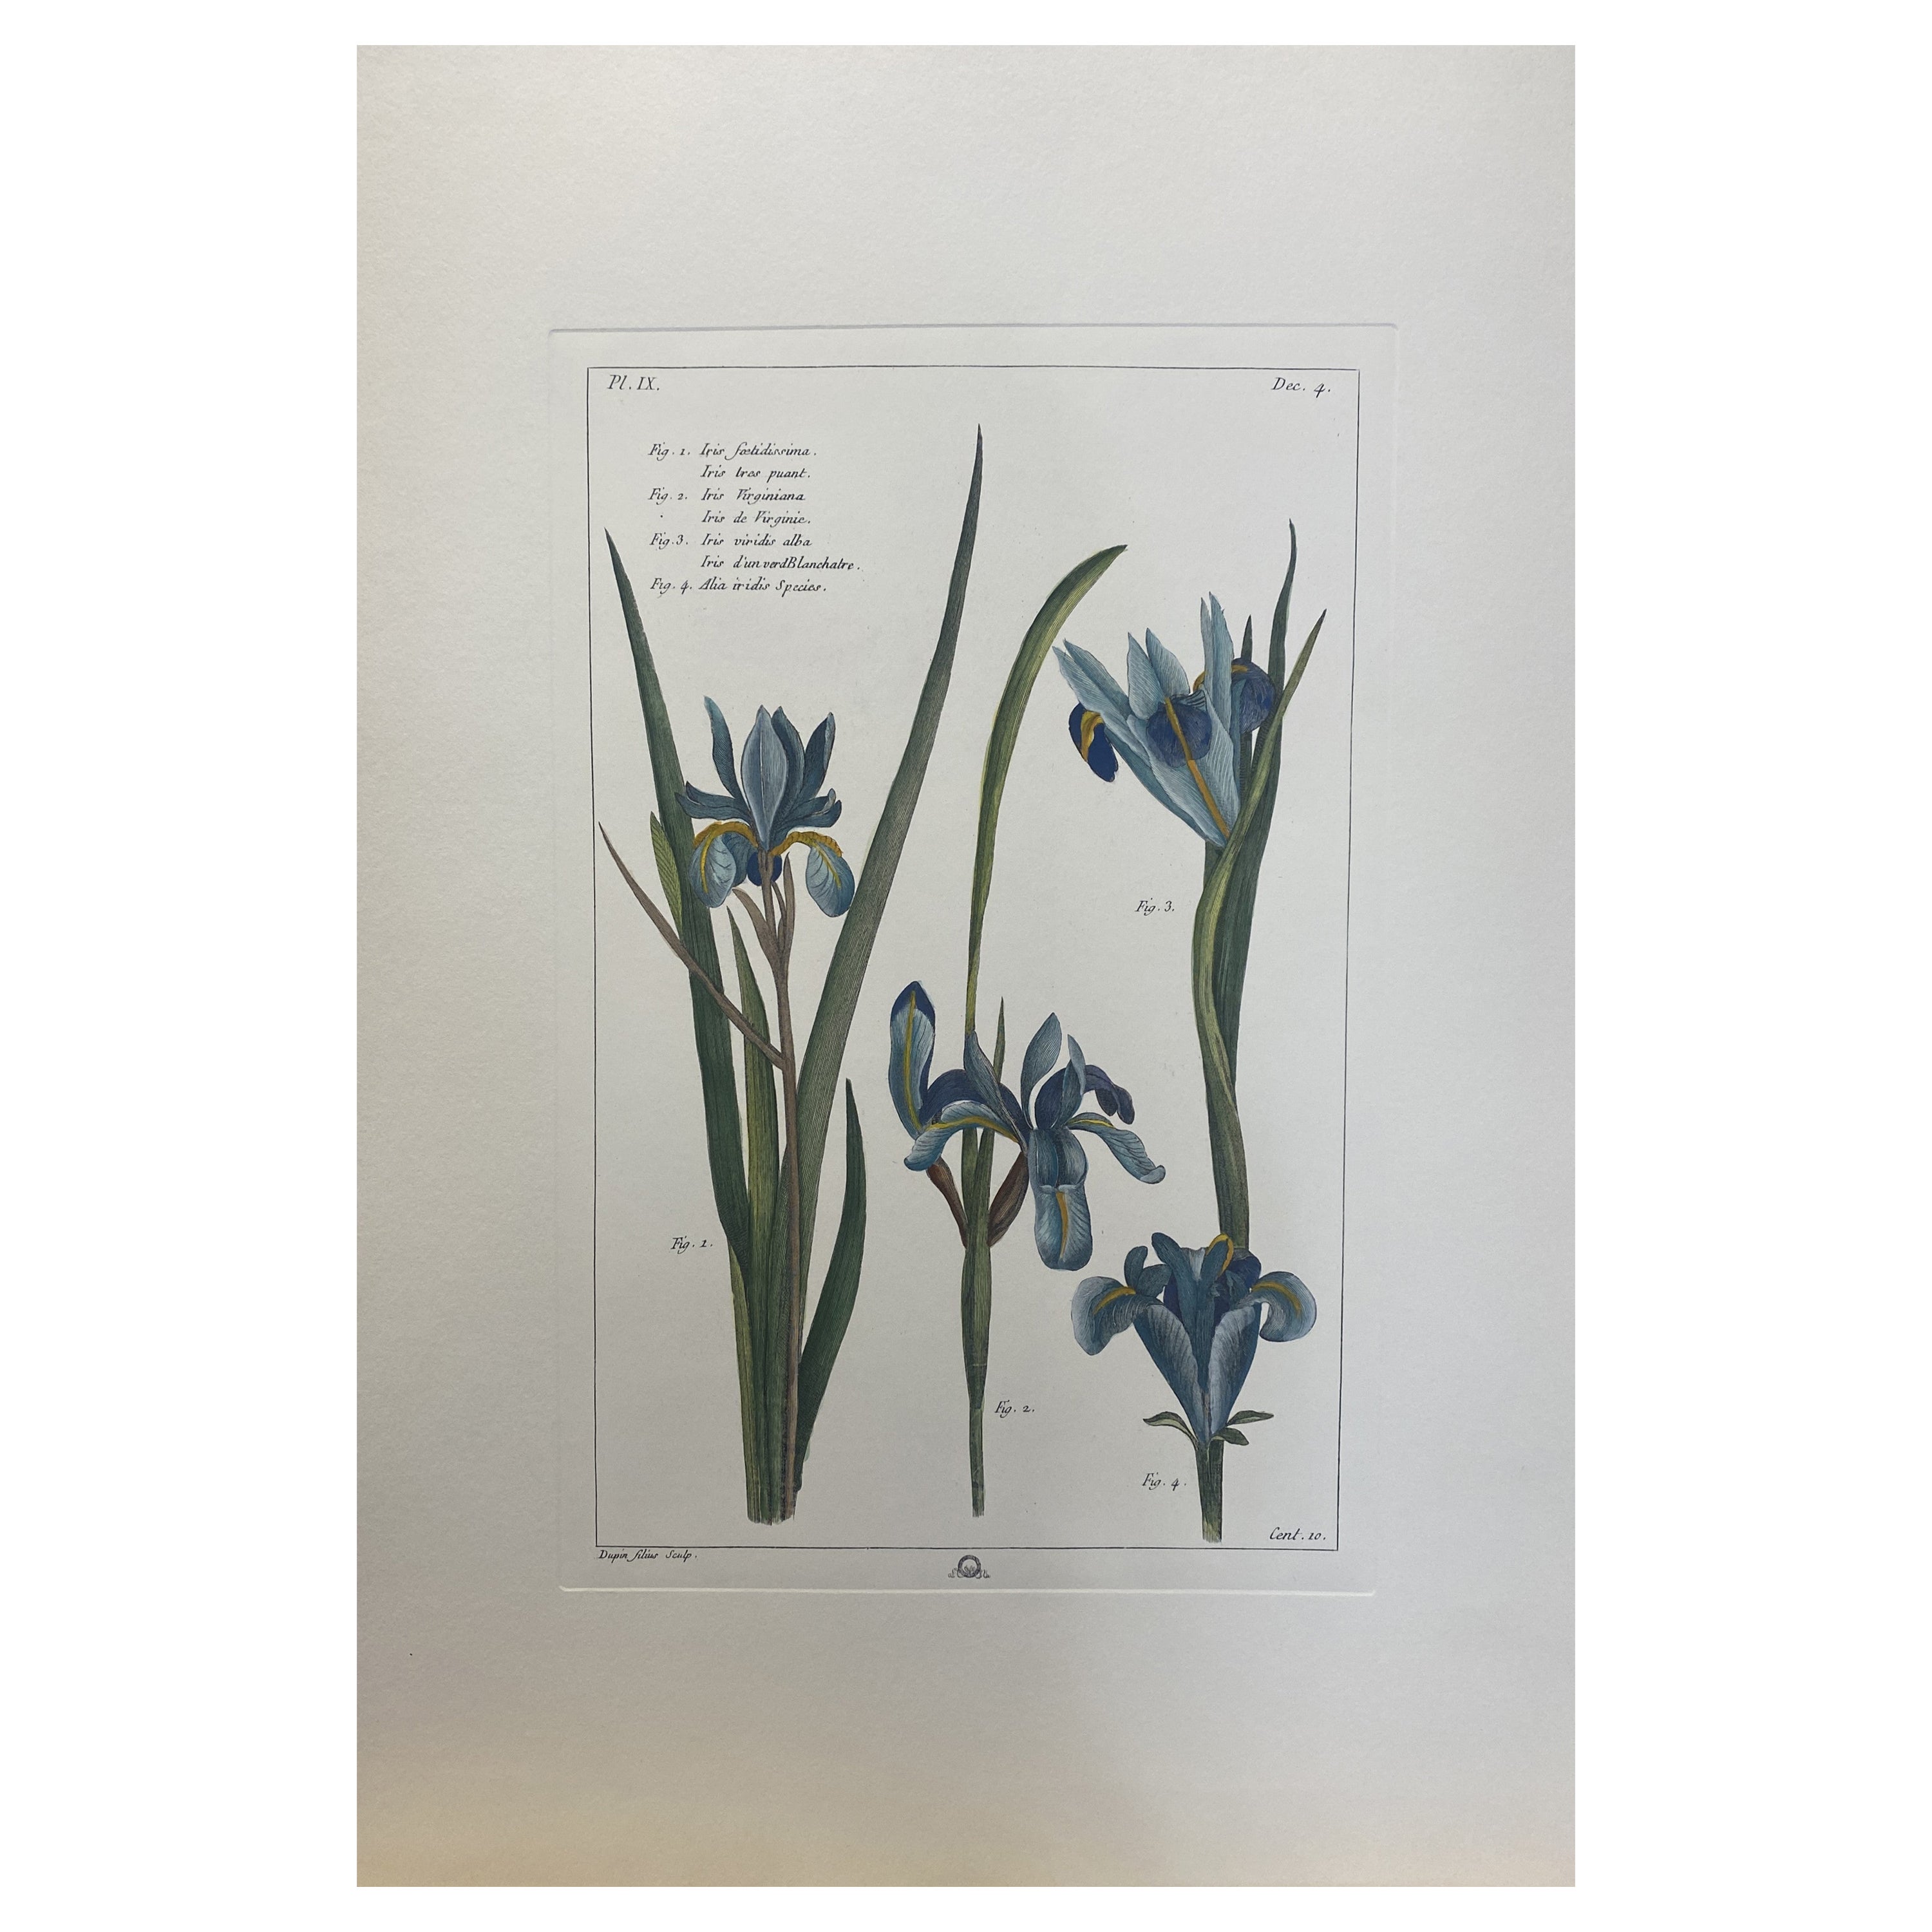 Italienischer Contemporary Hand Painted Botanical Print "Iris" 